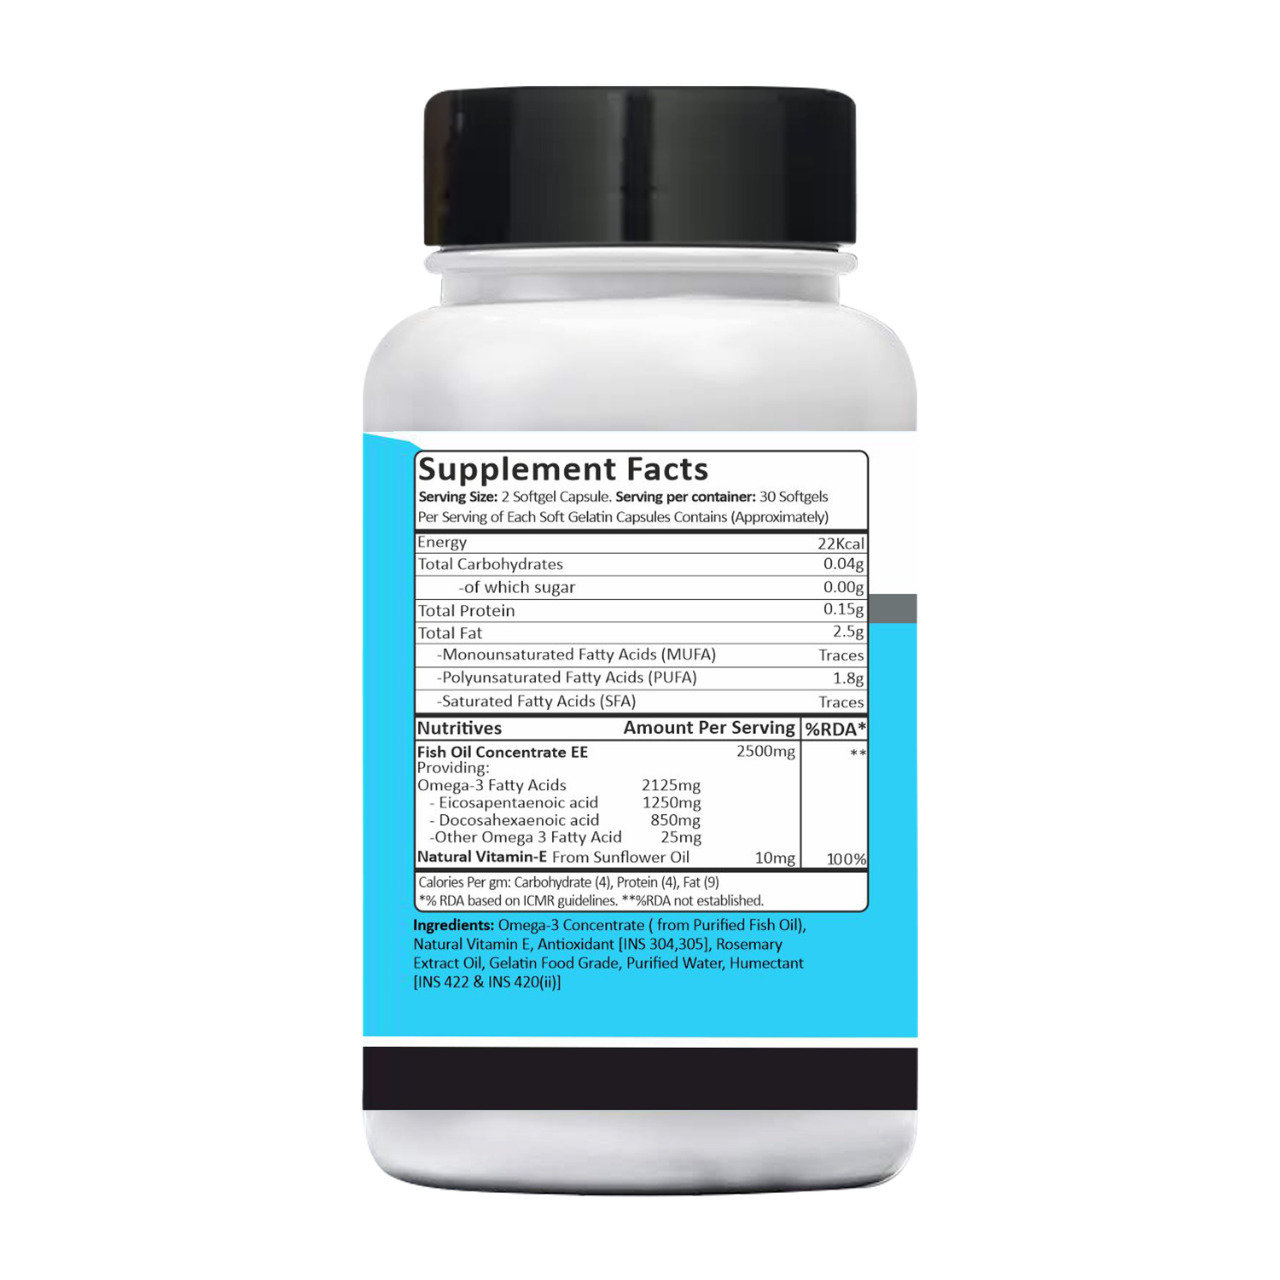 Omega 3 Fish Oil Softgel Capsule 3X Triple Strength 2500 mg Contains 1250mg EPA 720mg DHA with Other Omega 3 Fatty Acid 25mg 60 Softgel Capsules